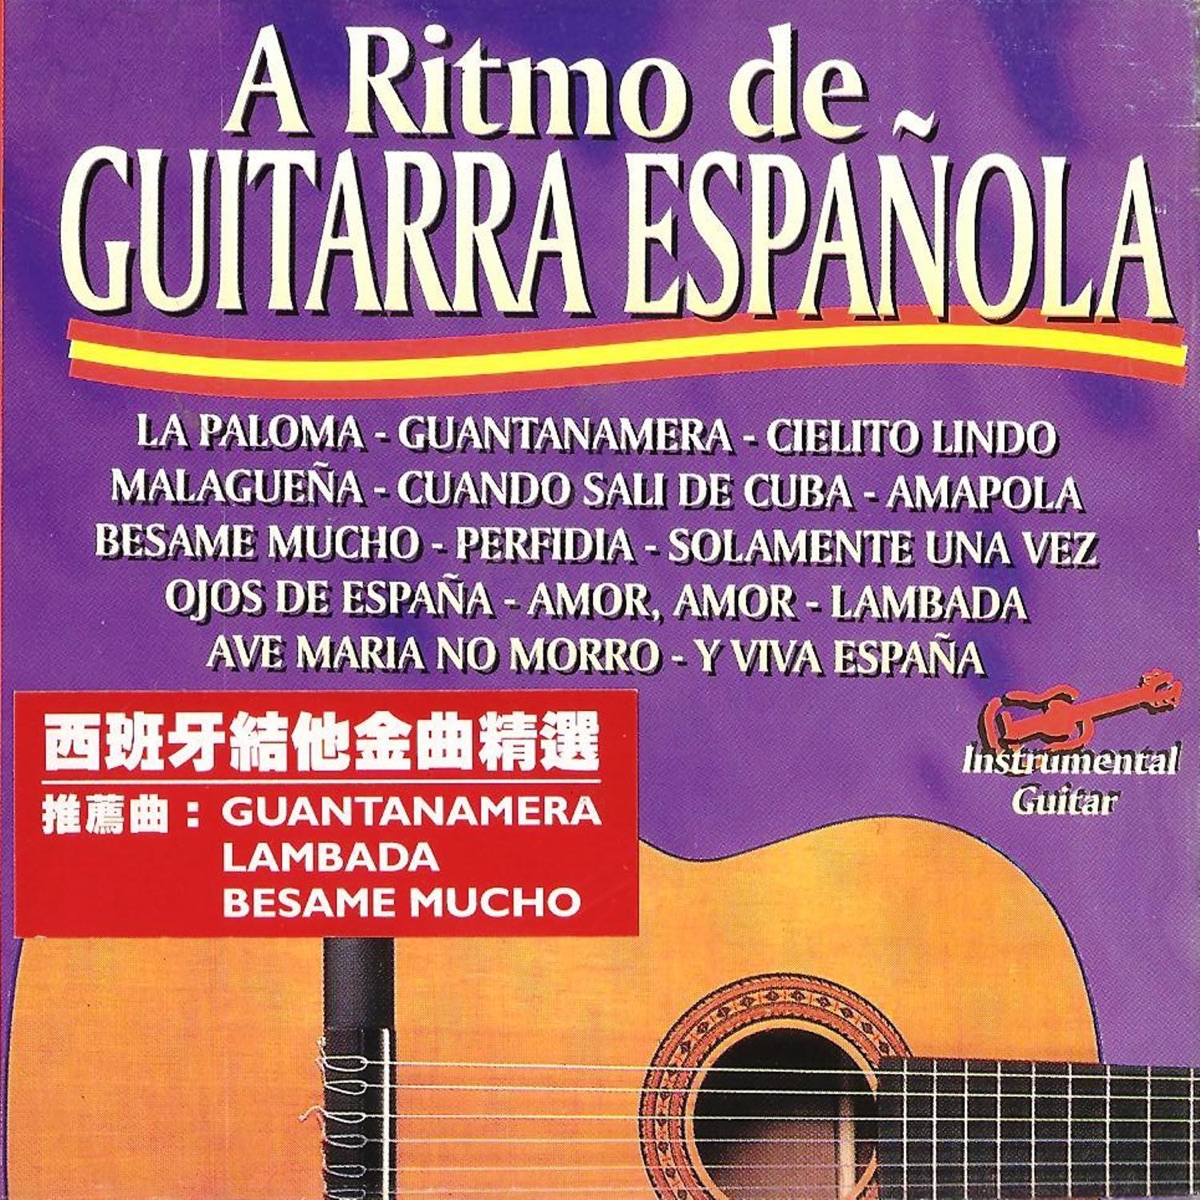 A Ritmo de Guitarra Española, Vol. 1 by Antonio de Lucena on Apple Music